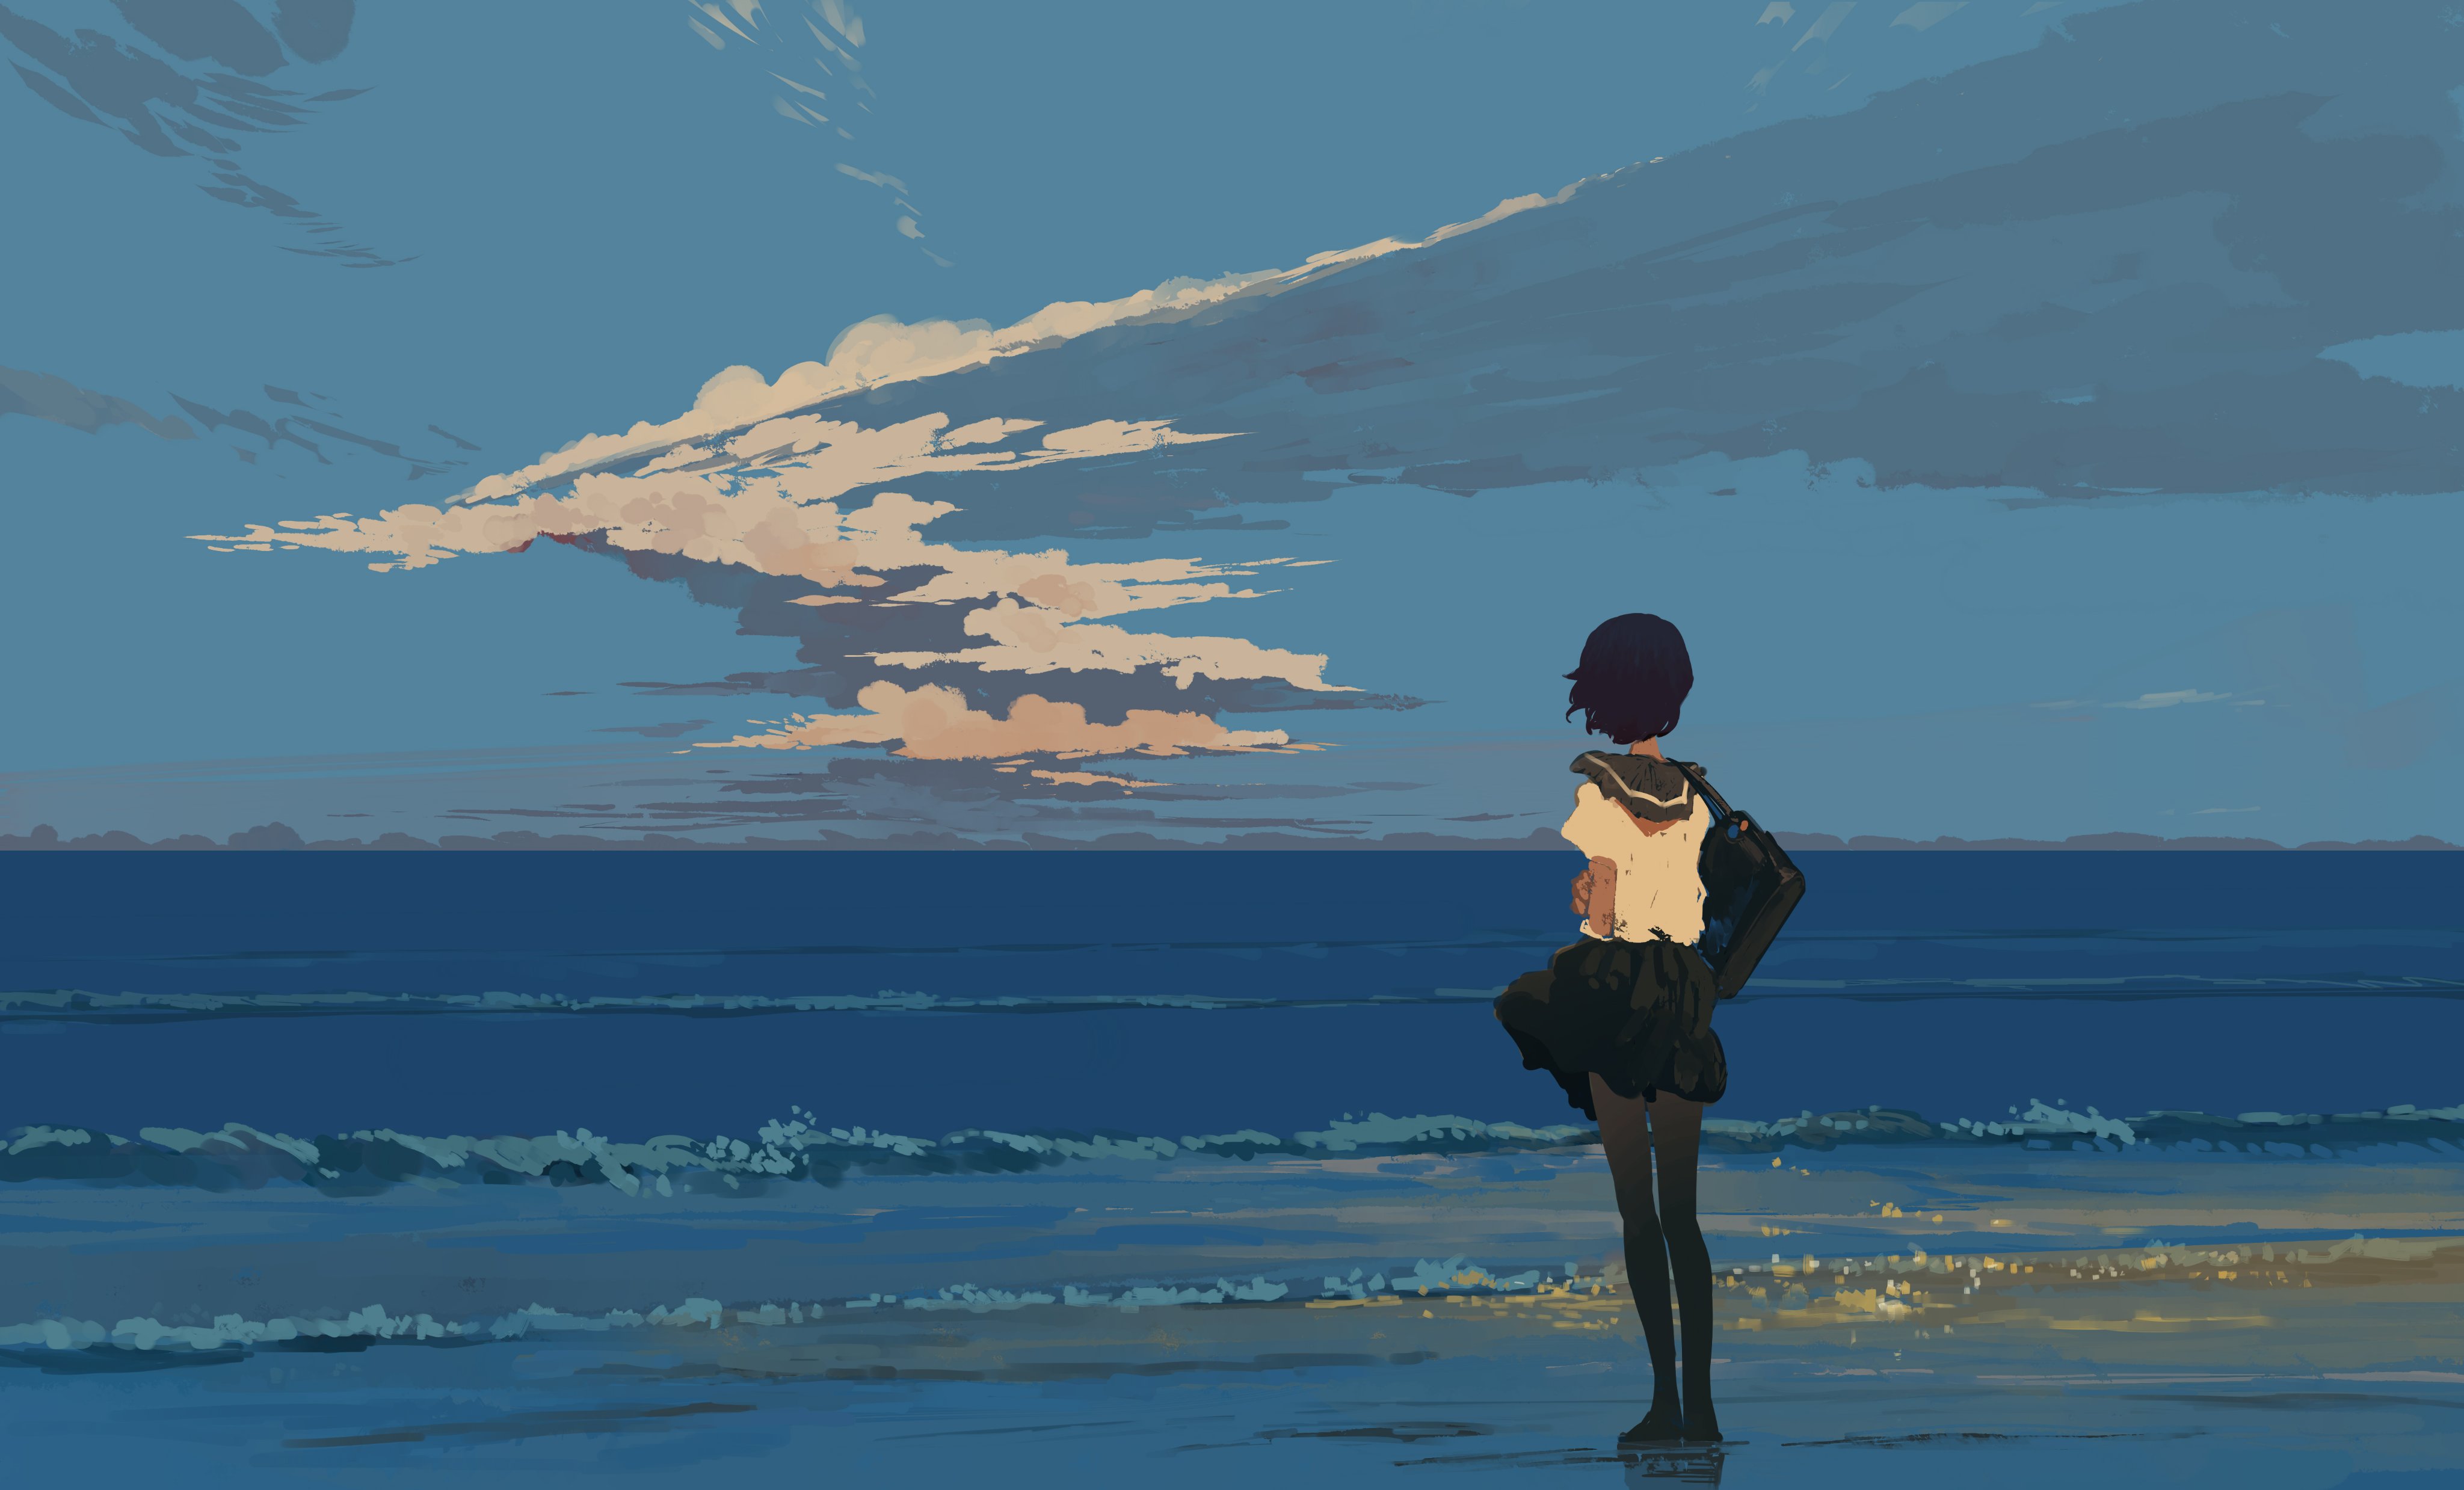 General 4096x2477 school uniform beach seashore sunset peaceful waves bangjoy schoolgirl standing water clouds sky digital art